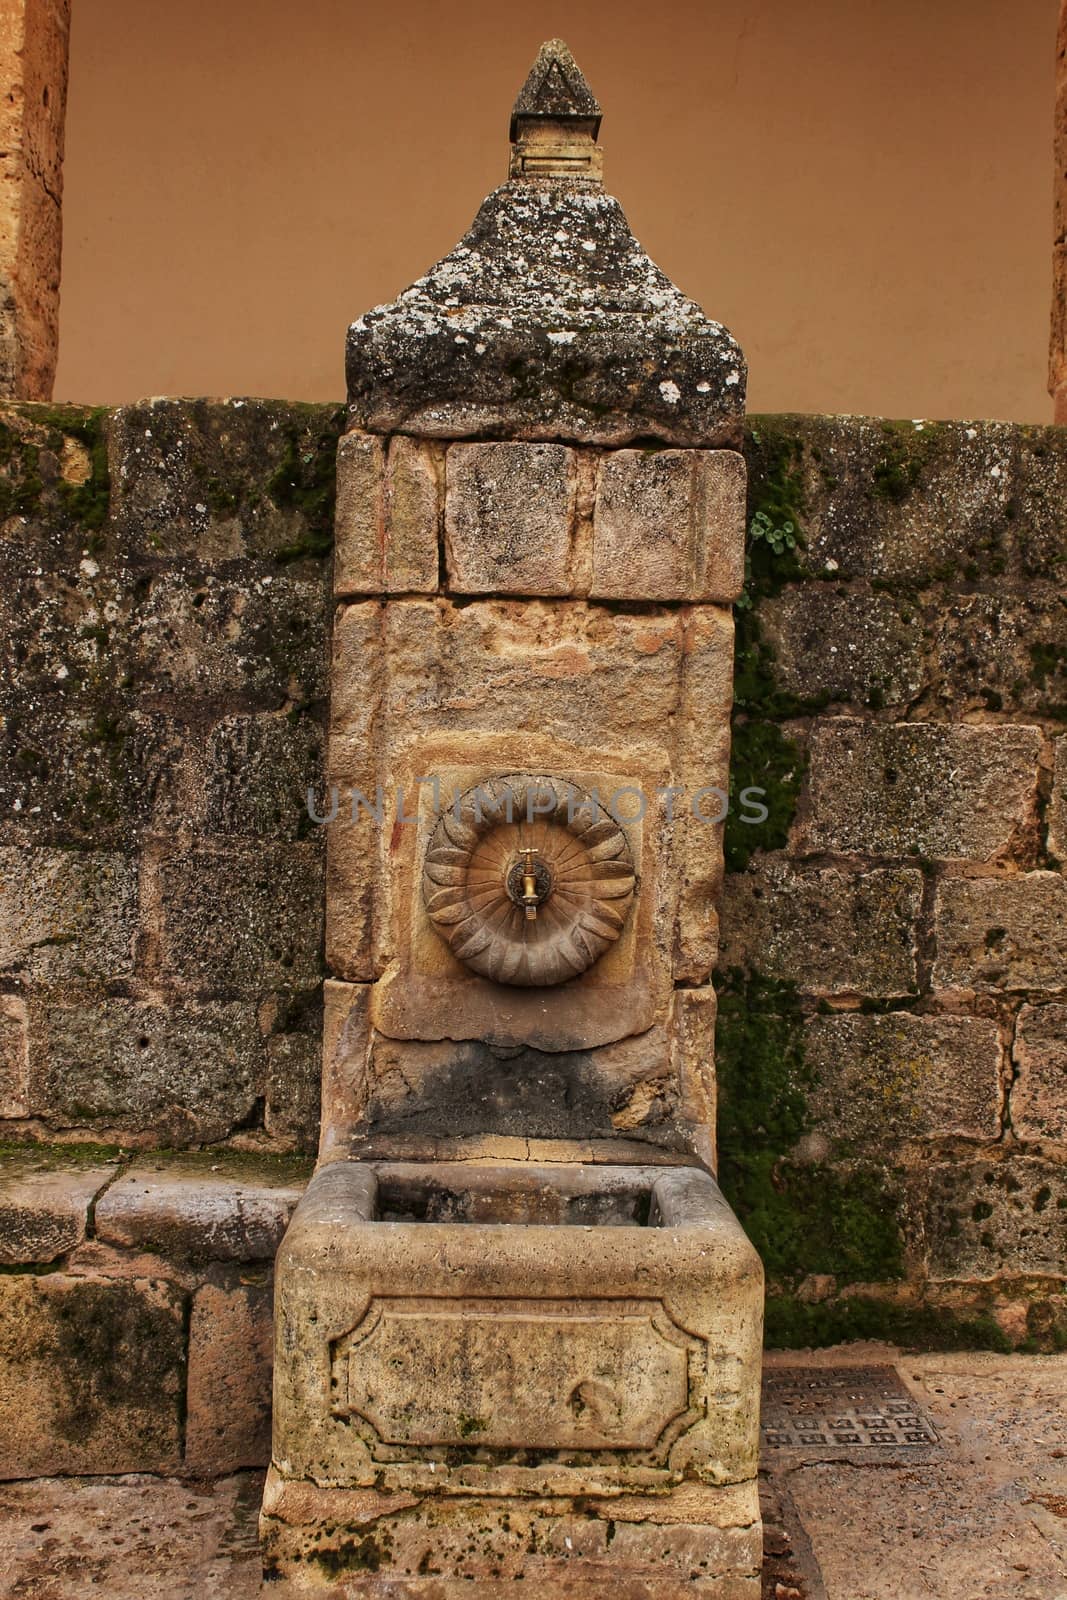 Old stone fountain in la Plaza Mayor in Alcaraz, Castile-La Mancha, Spain